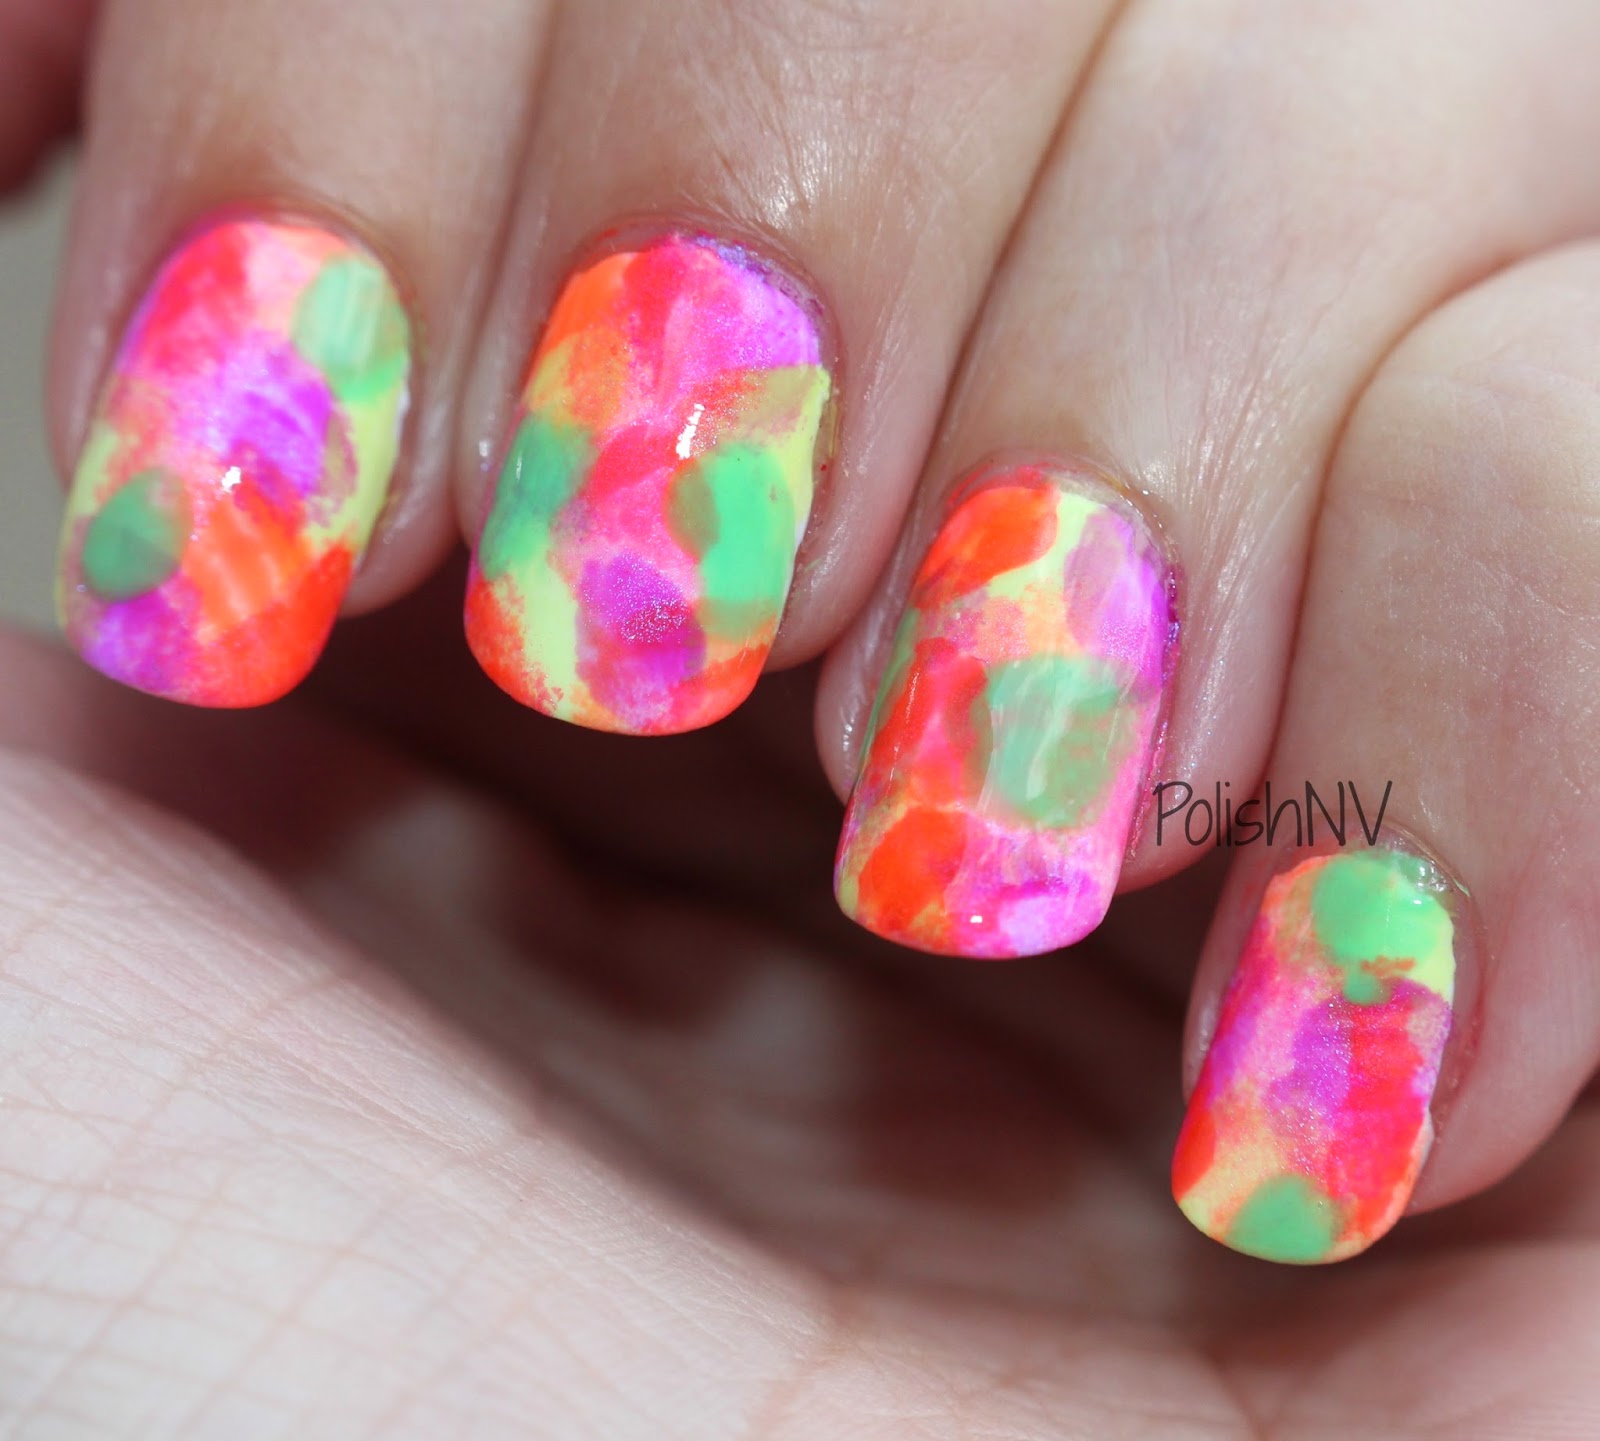 PolishNV: OPI Neons 2014 Sponged Nail Art Manicure